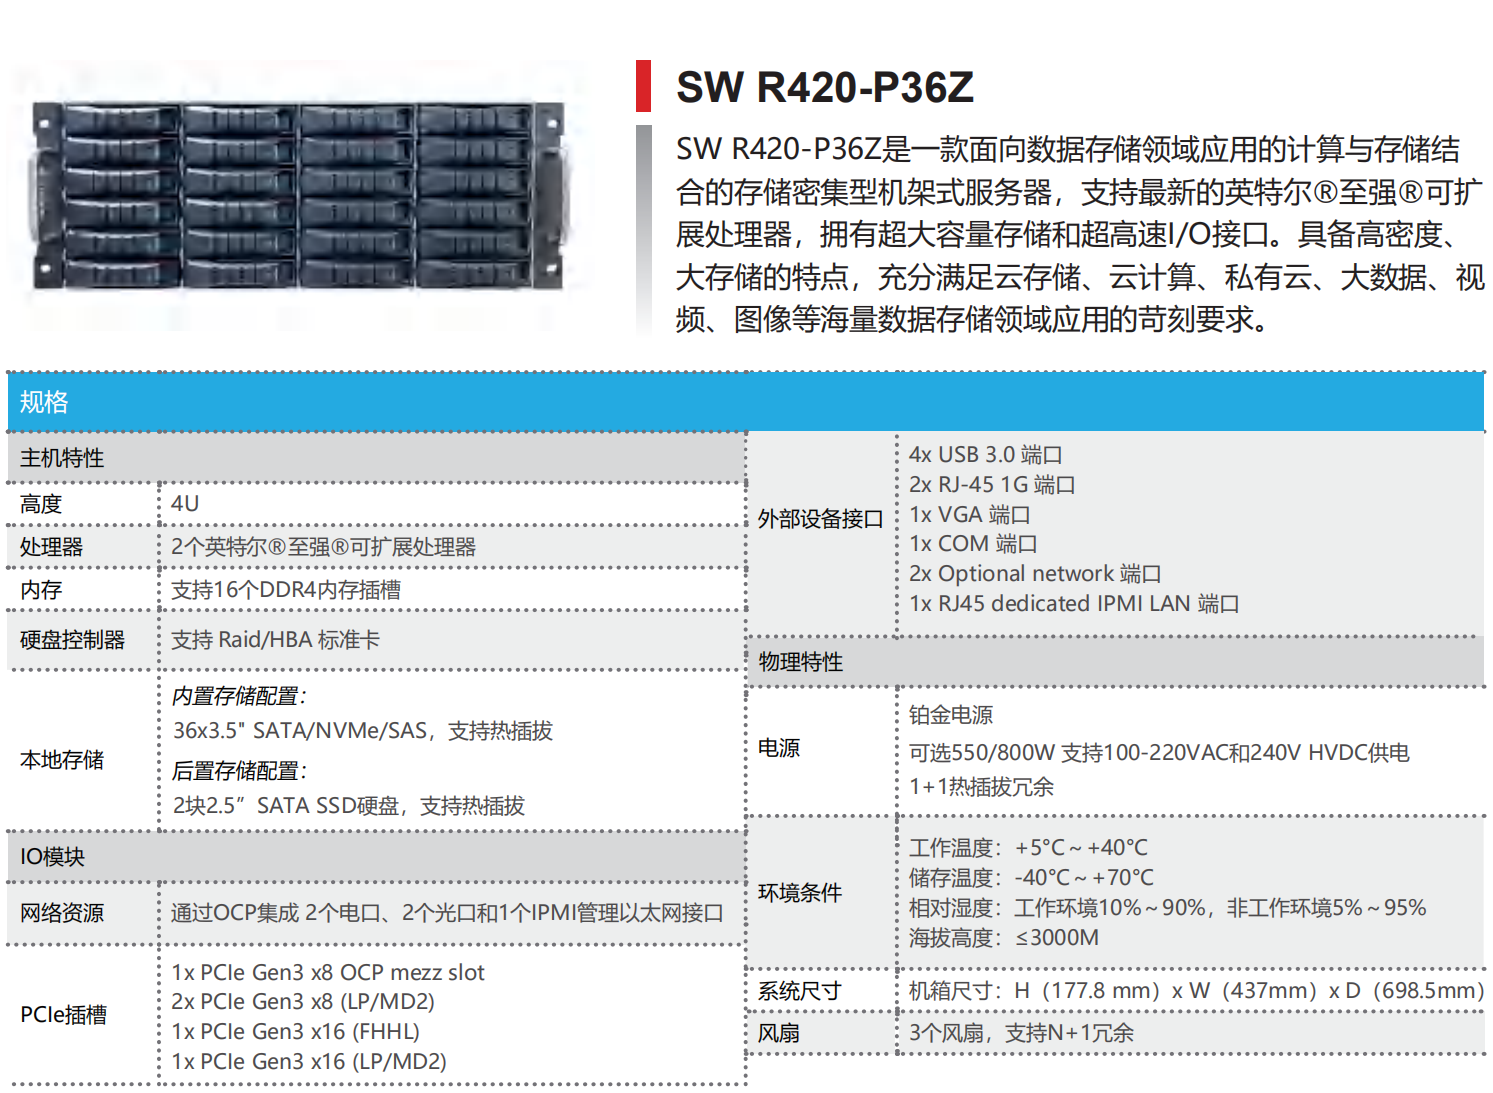 INTEL 平台存储服务器—SW R420-P36Z(图1)